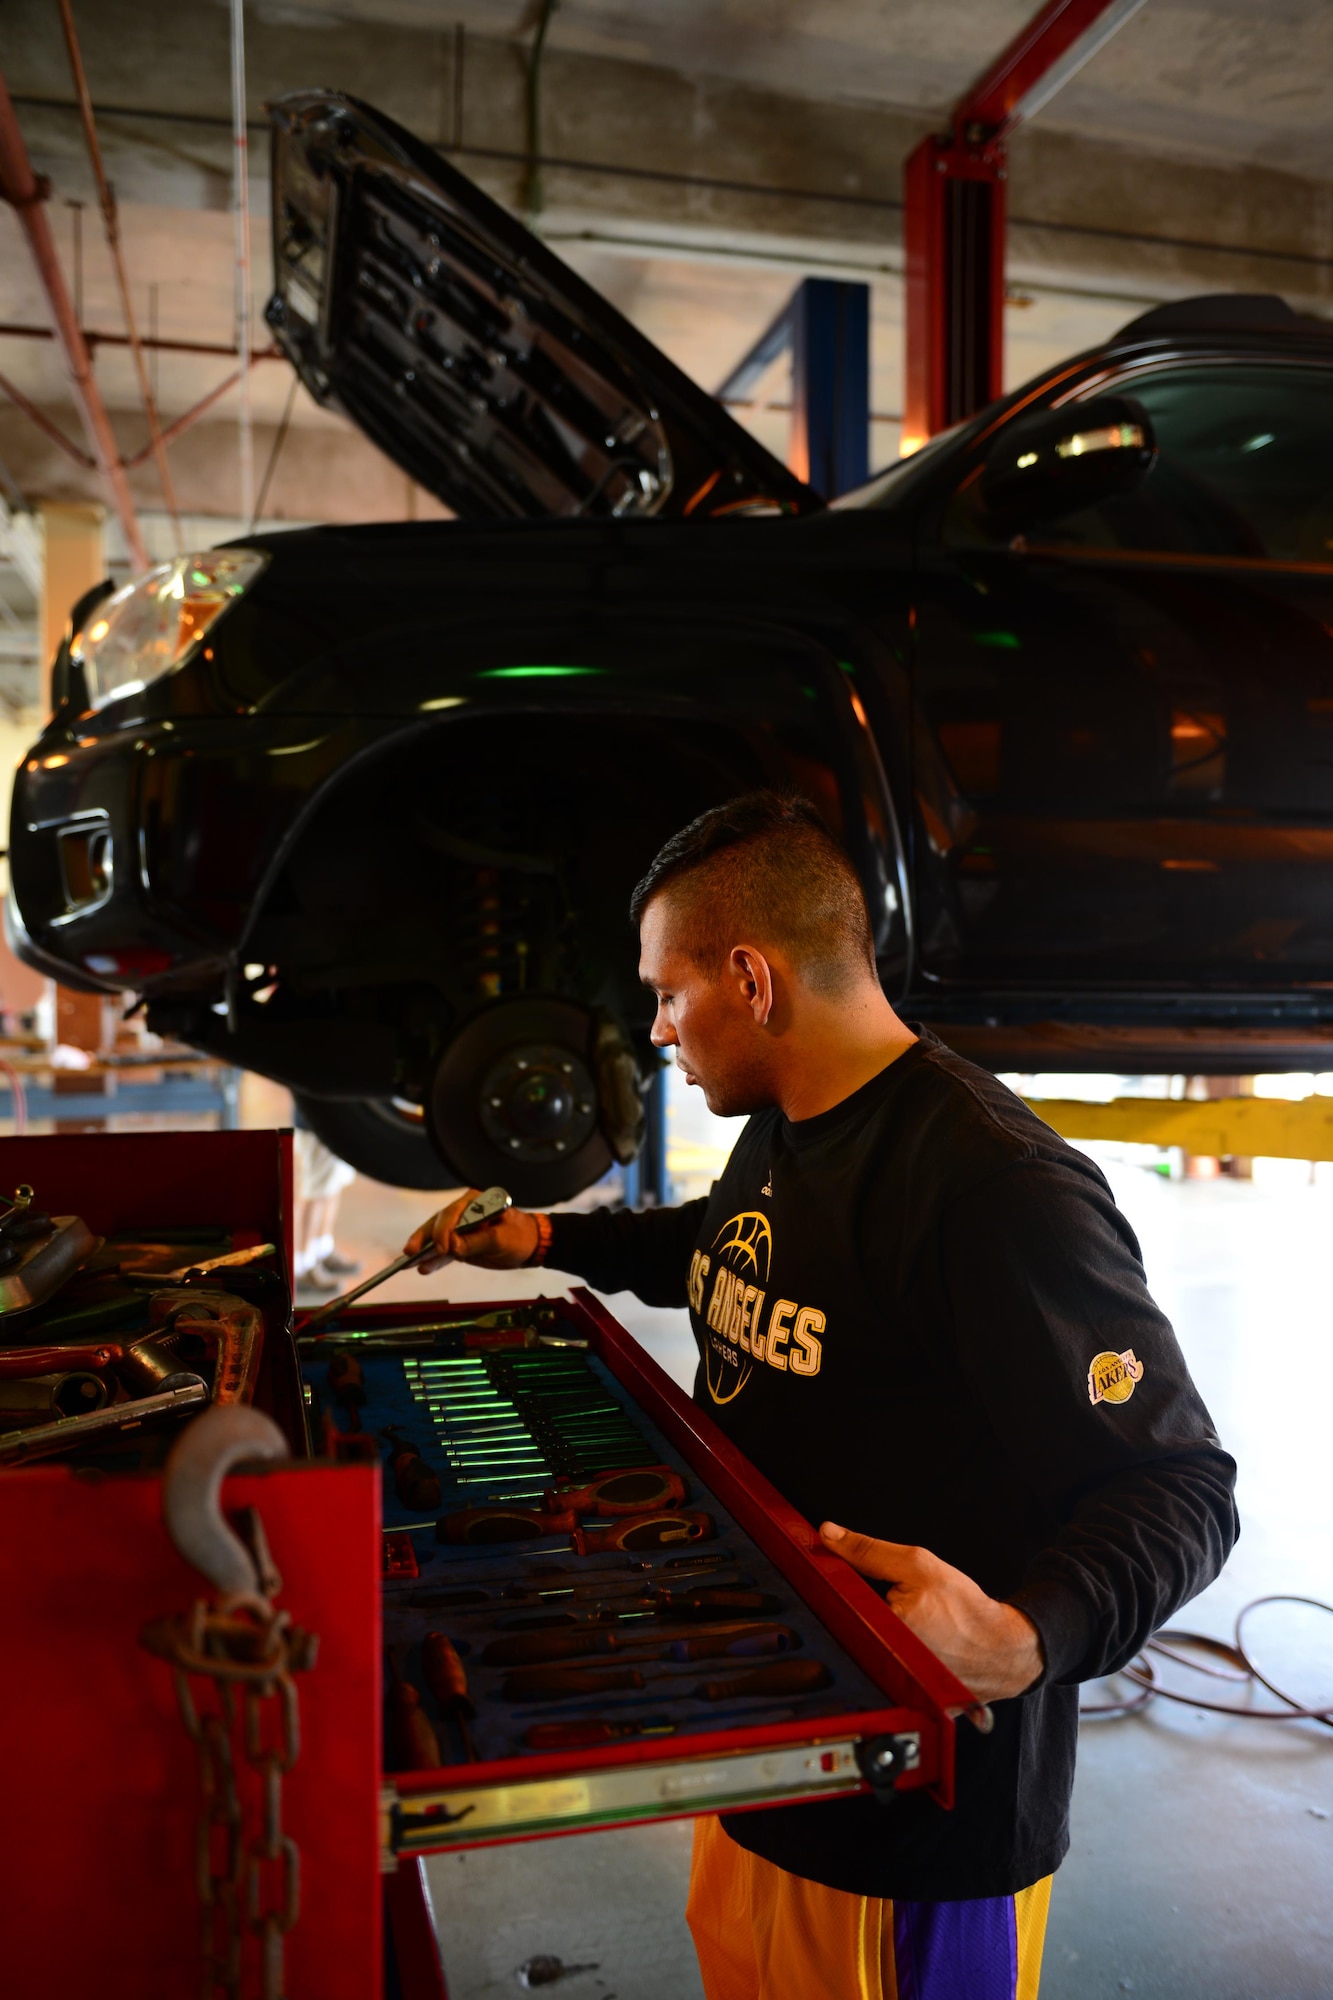 Auto Hobby Shop empowers community for do-it-yourself repairsu003e Andersen Air Force Baseu003e Articles